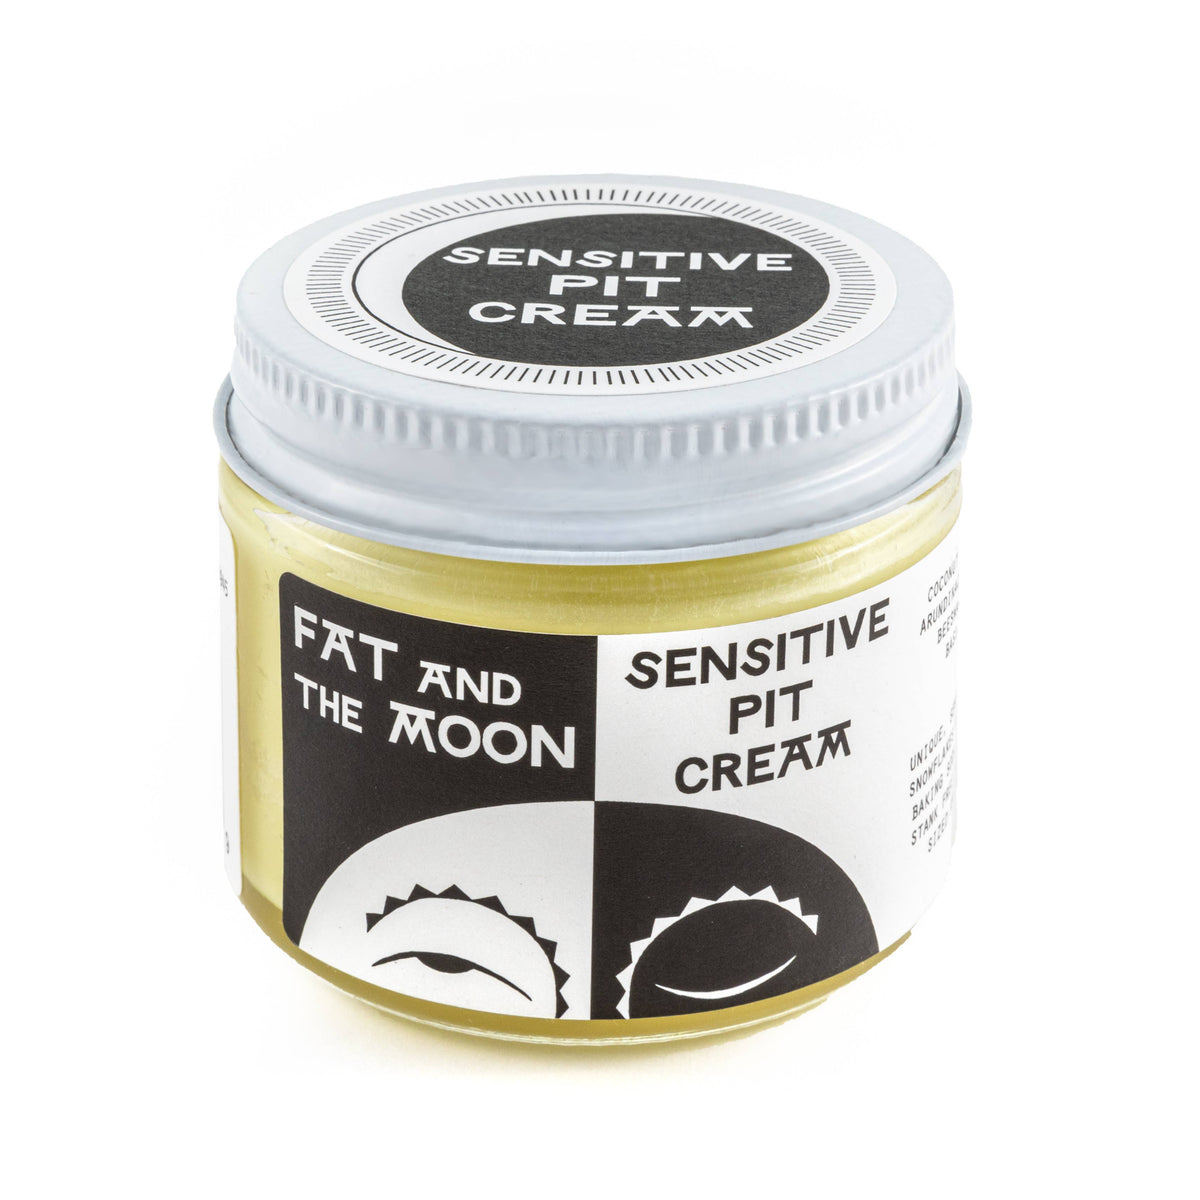 2 oz Sensitive Pit Cream